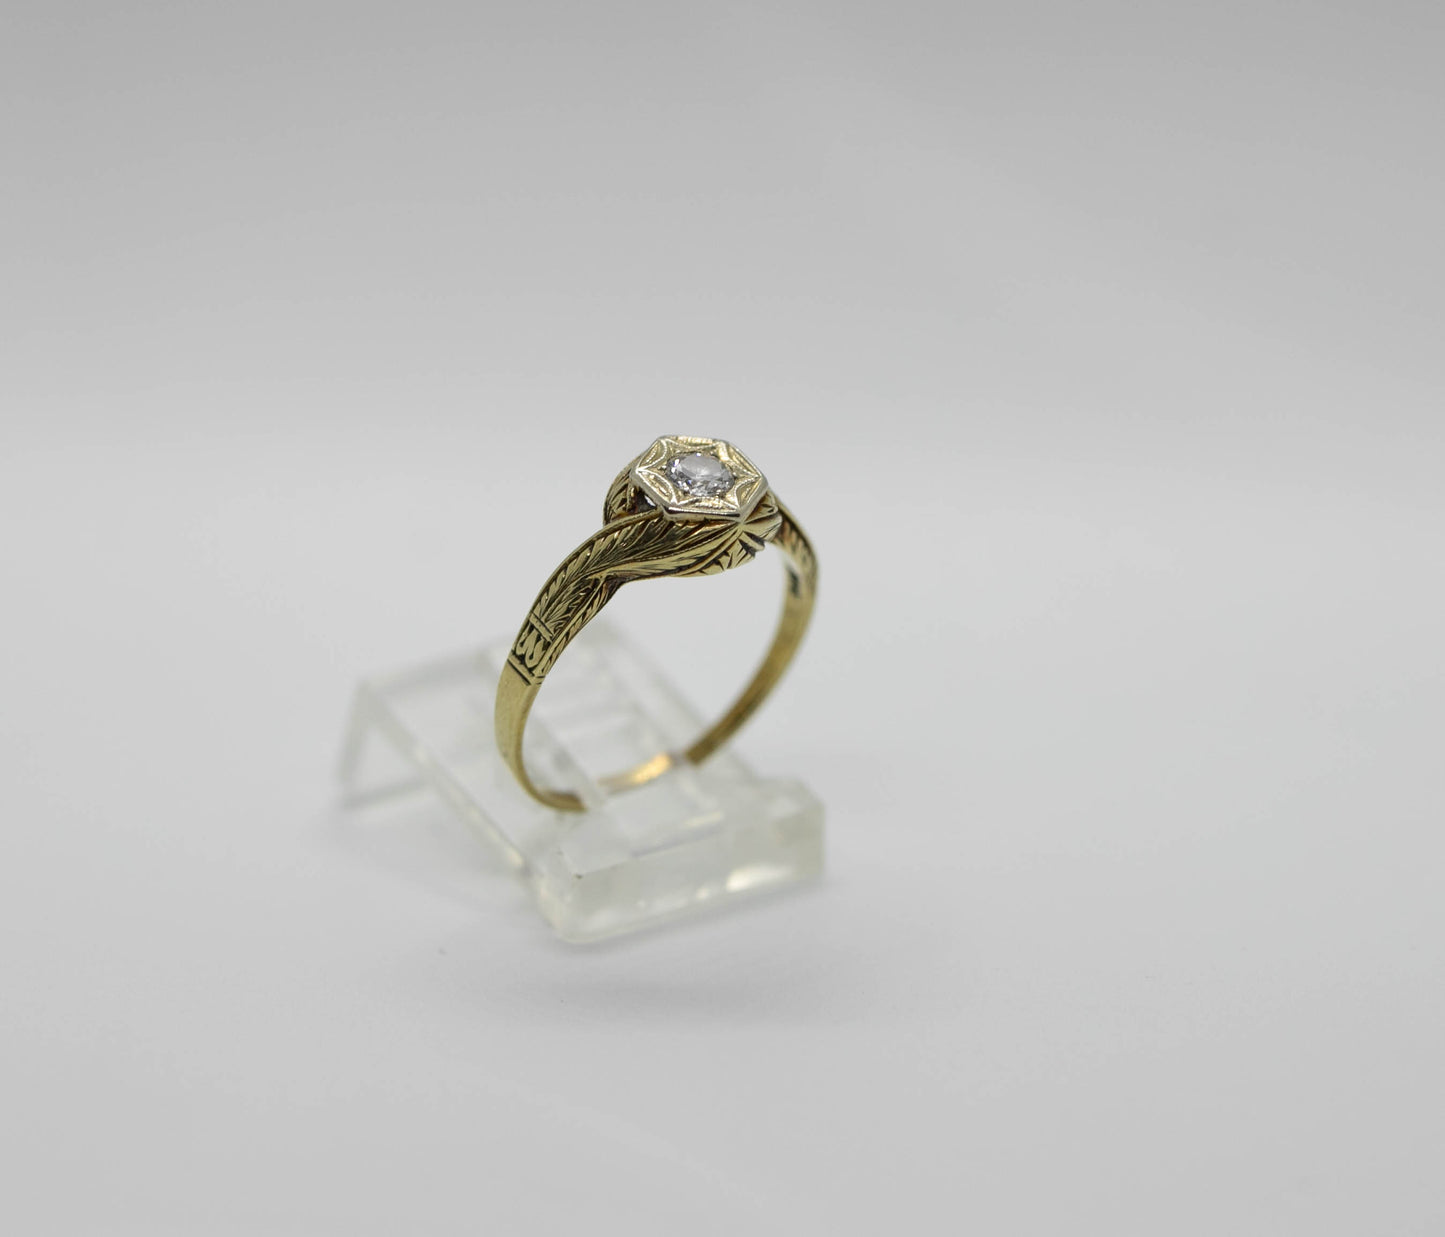 Vintage diamond ring